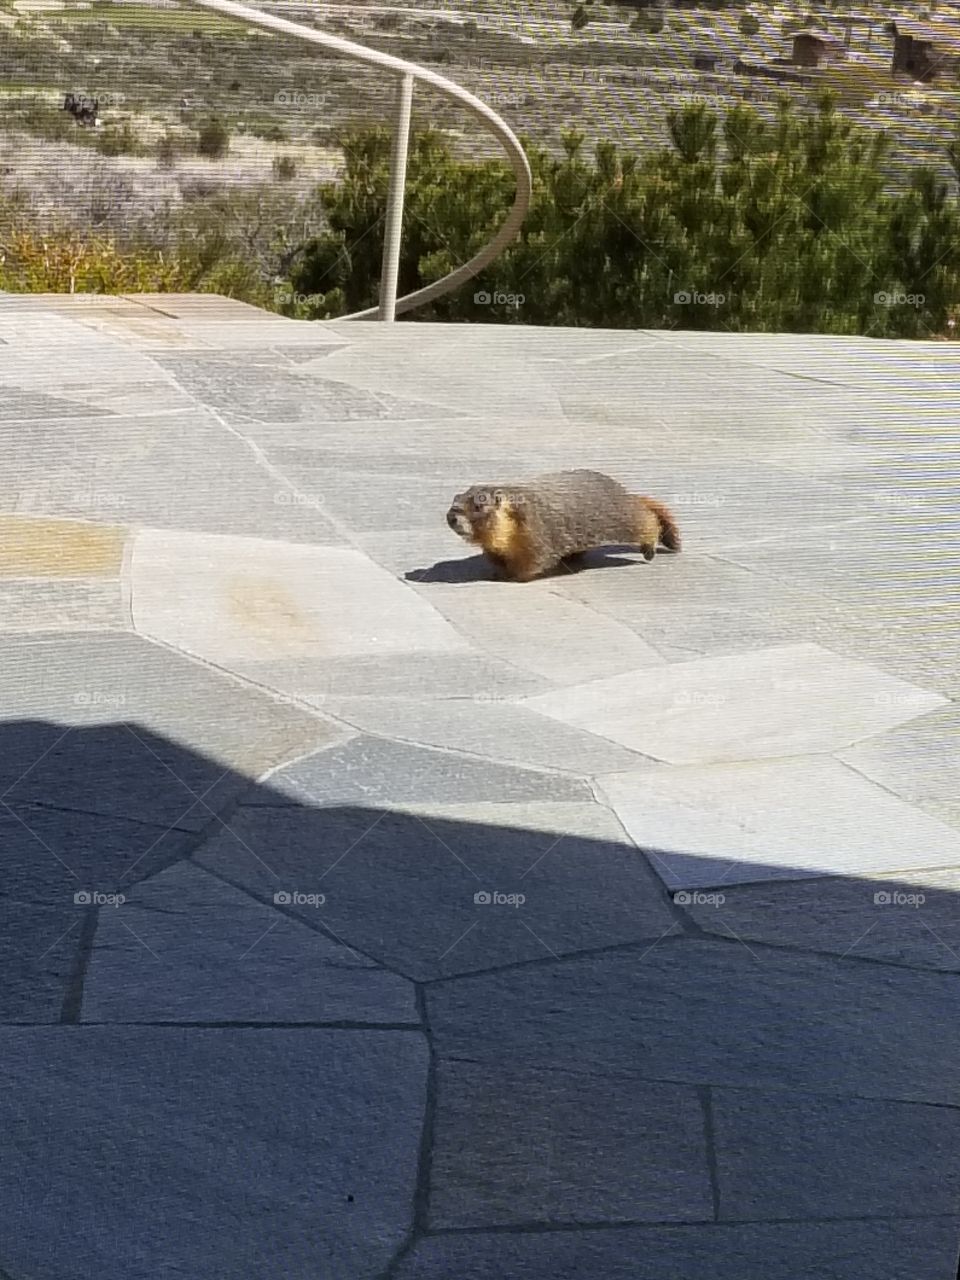 Found a marmot in the yard